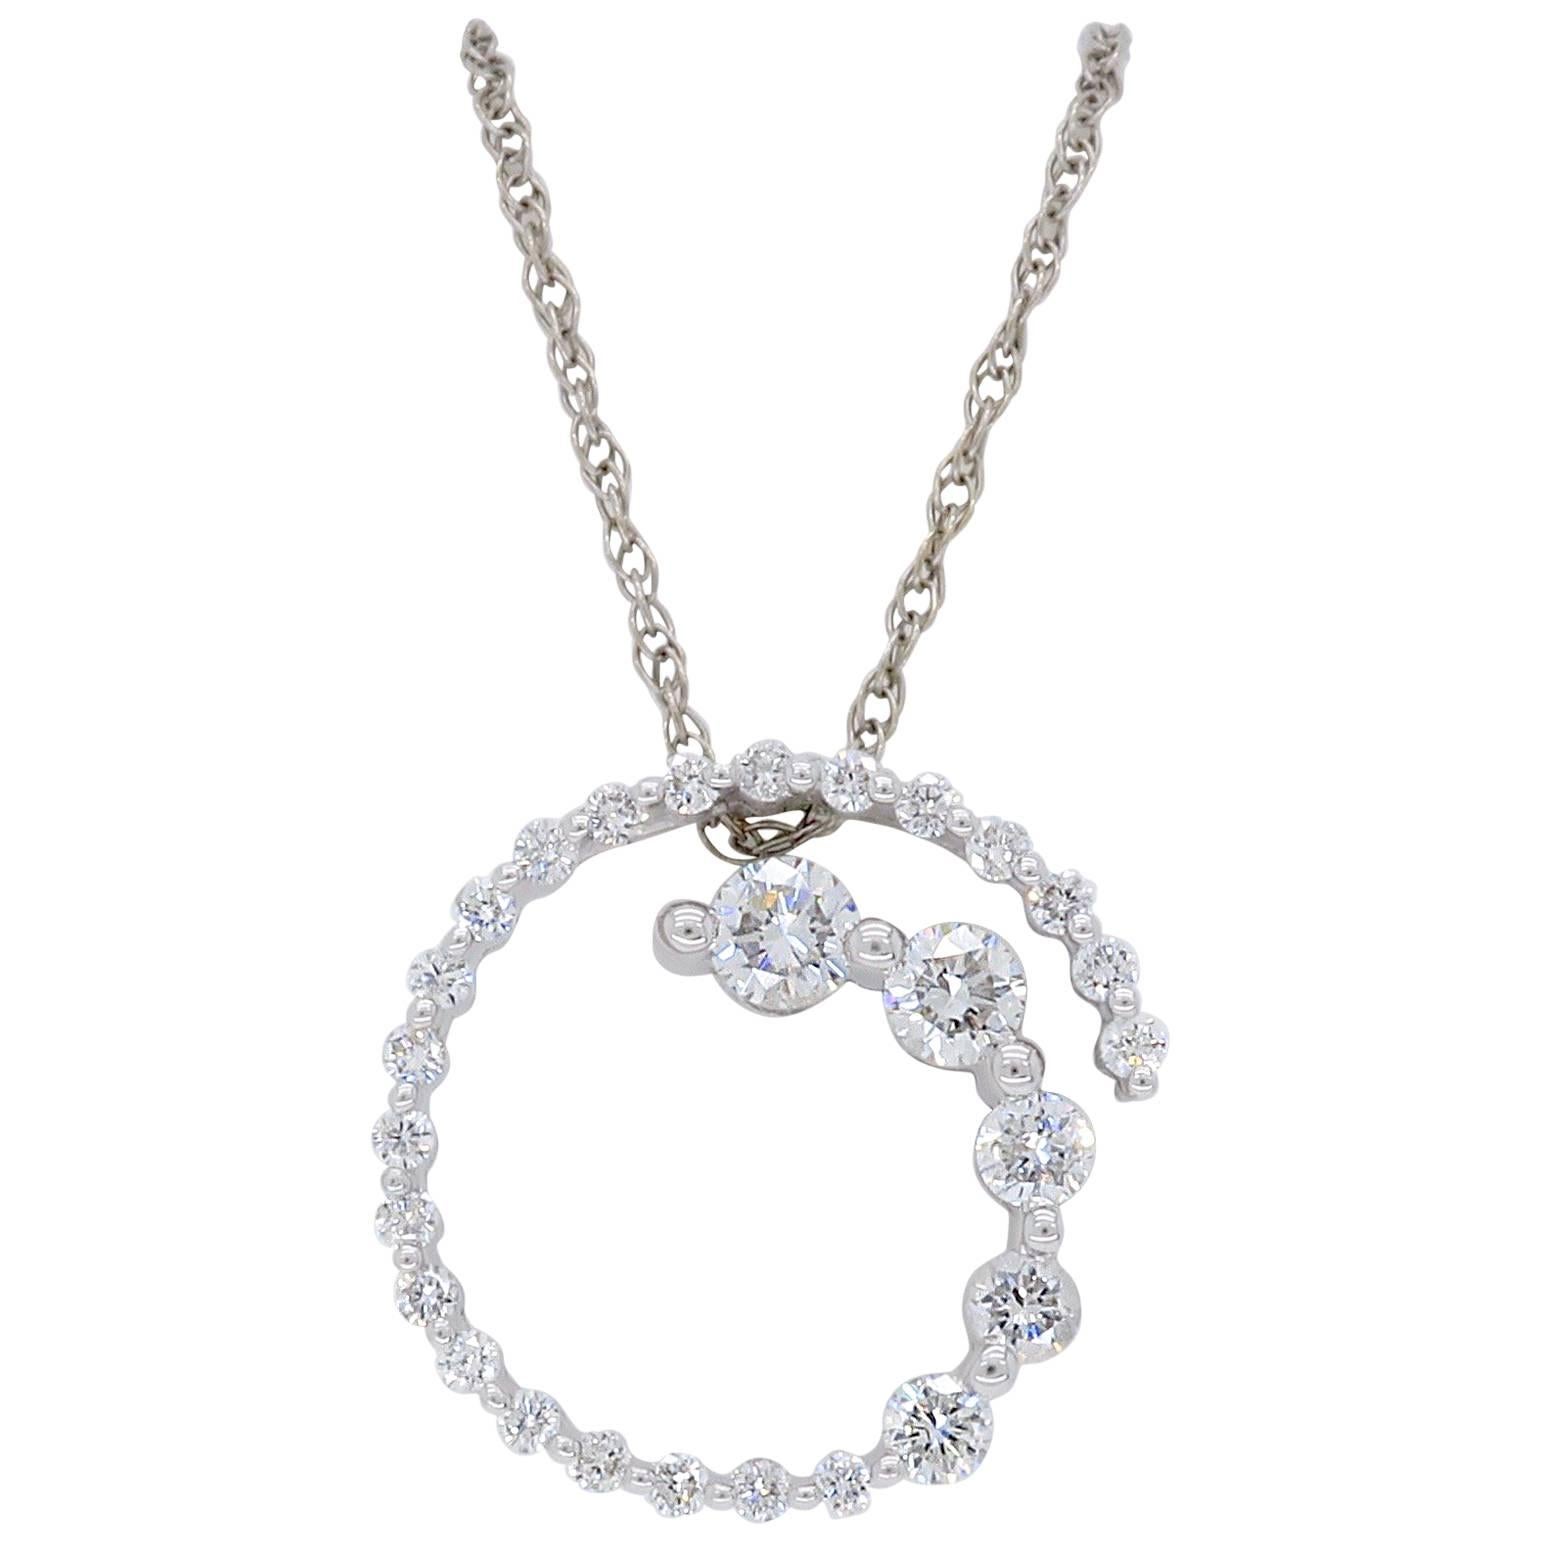  Diamond White Gold Pendant Chain Necklace 